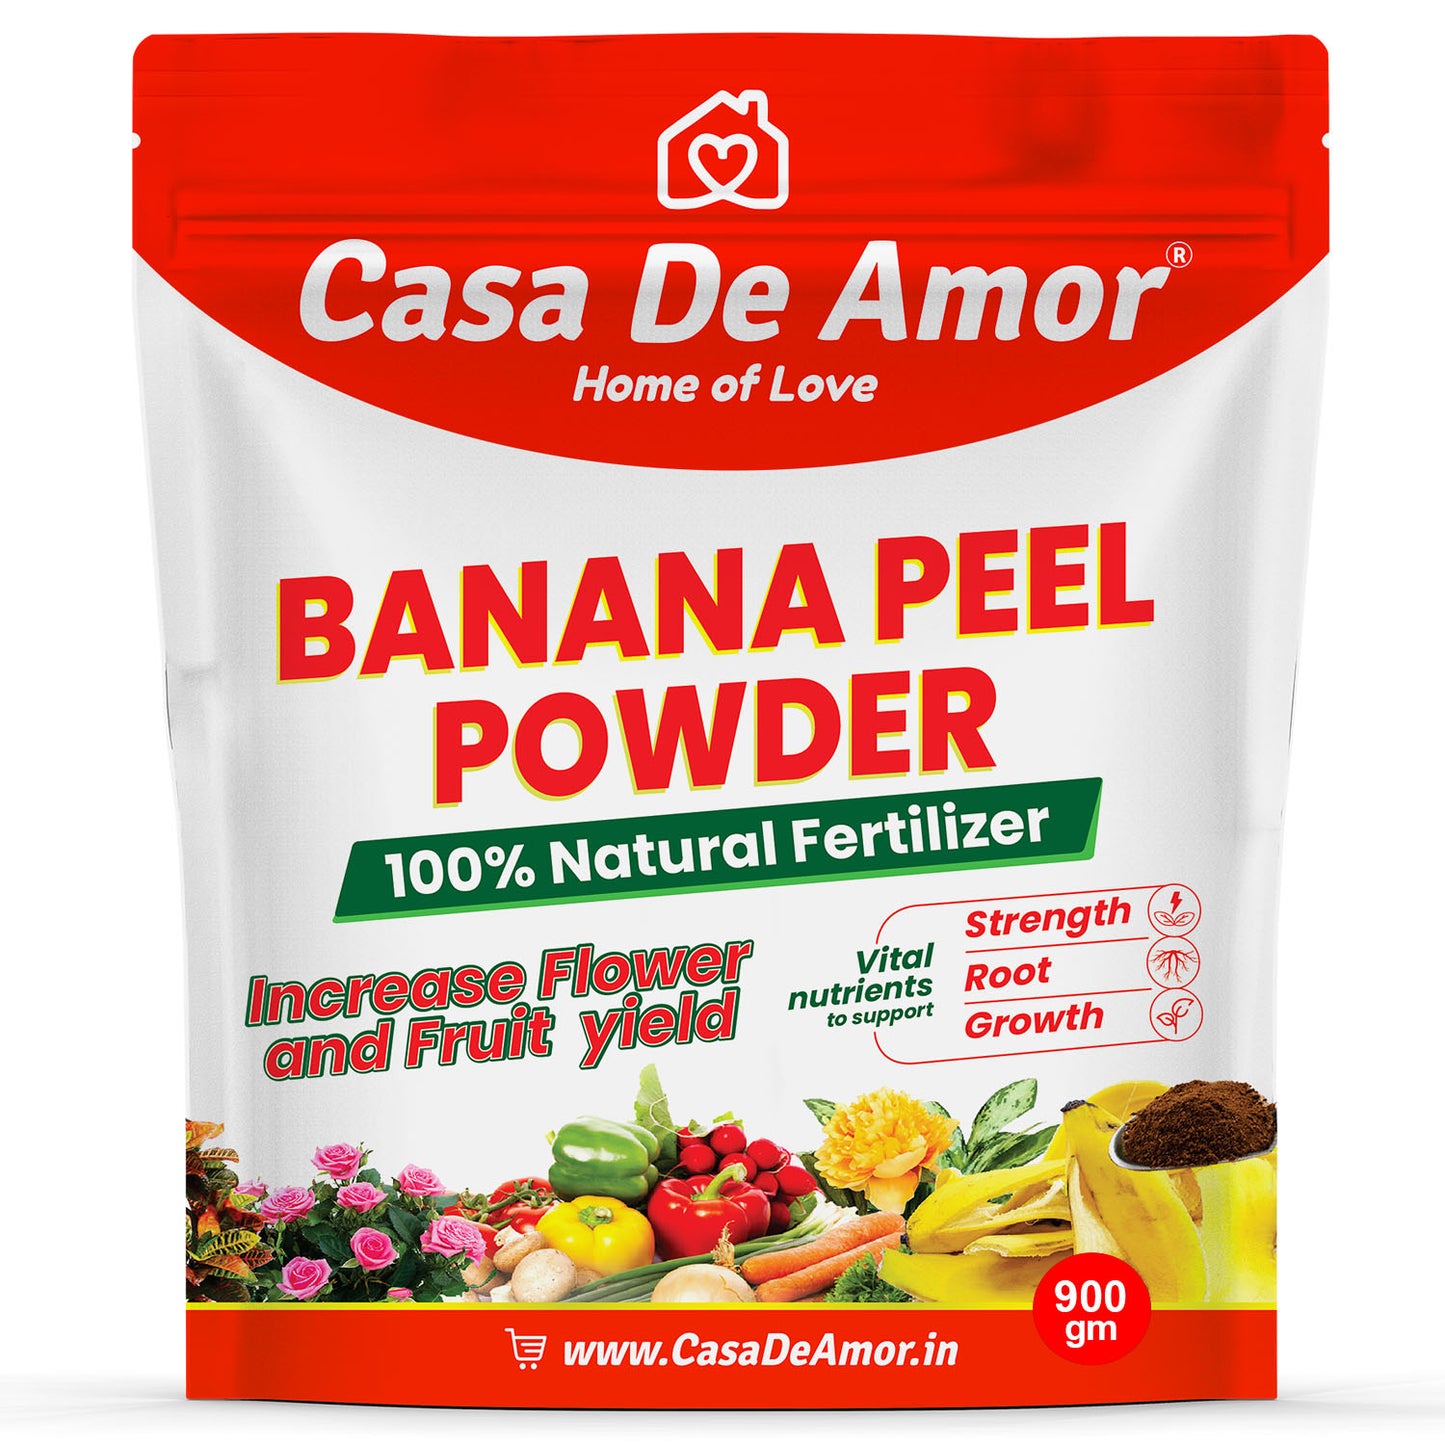 Casa De Amor Banana Peel Powder Fertilizer for Plants, Natural Bloom Booster for Plants and Gardening